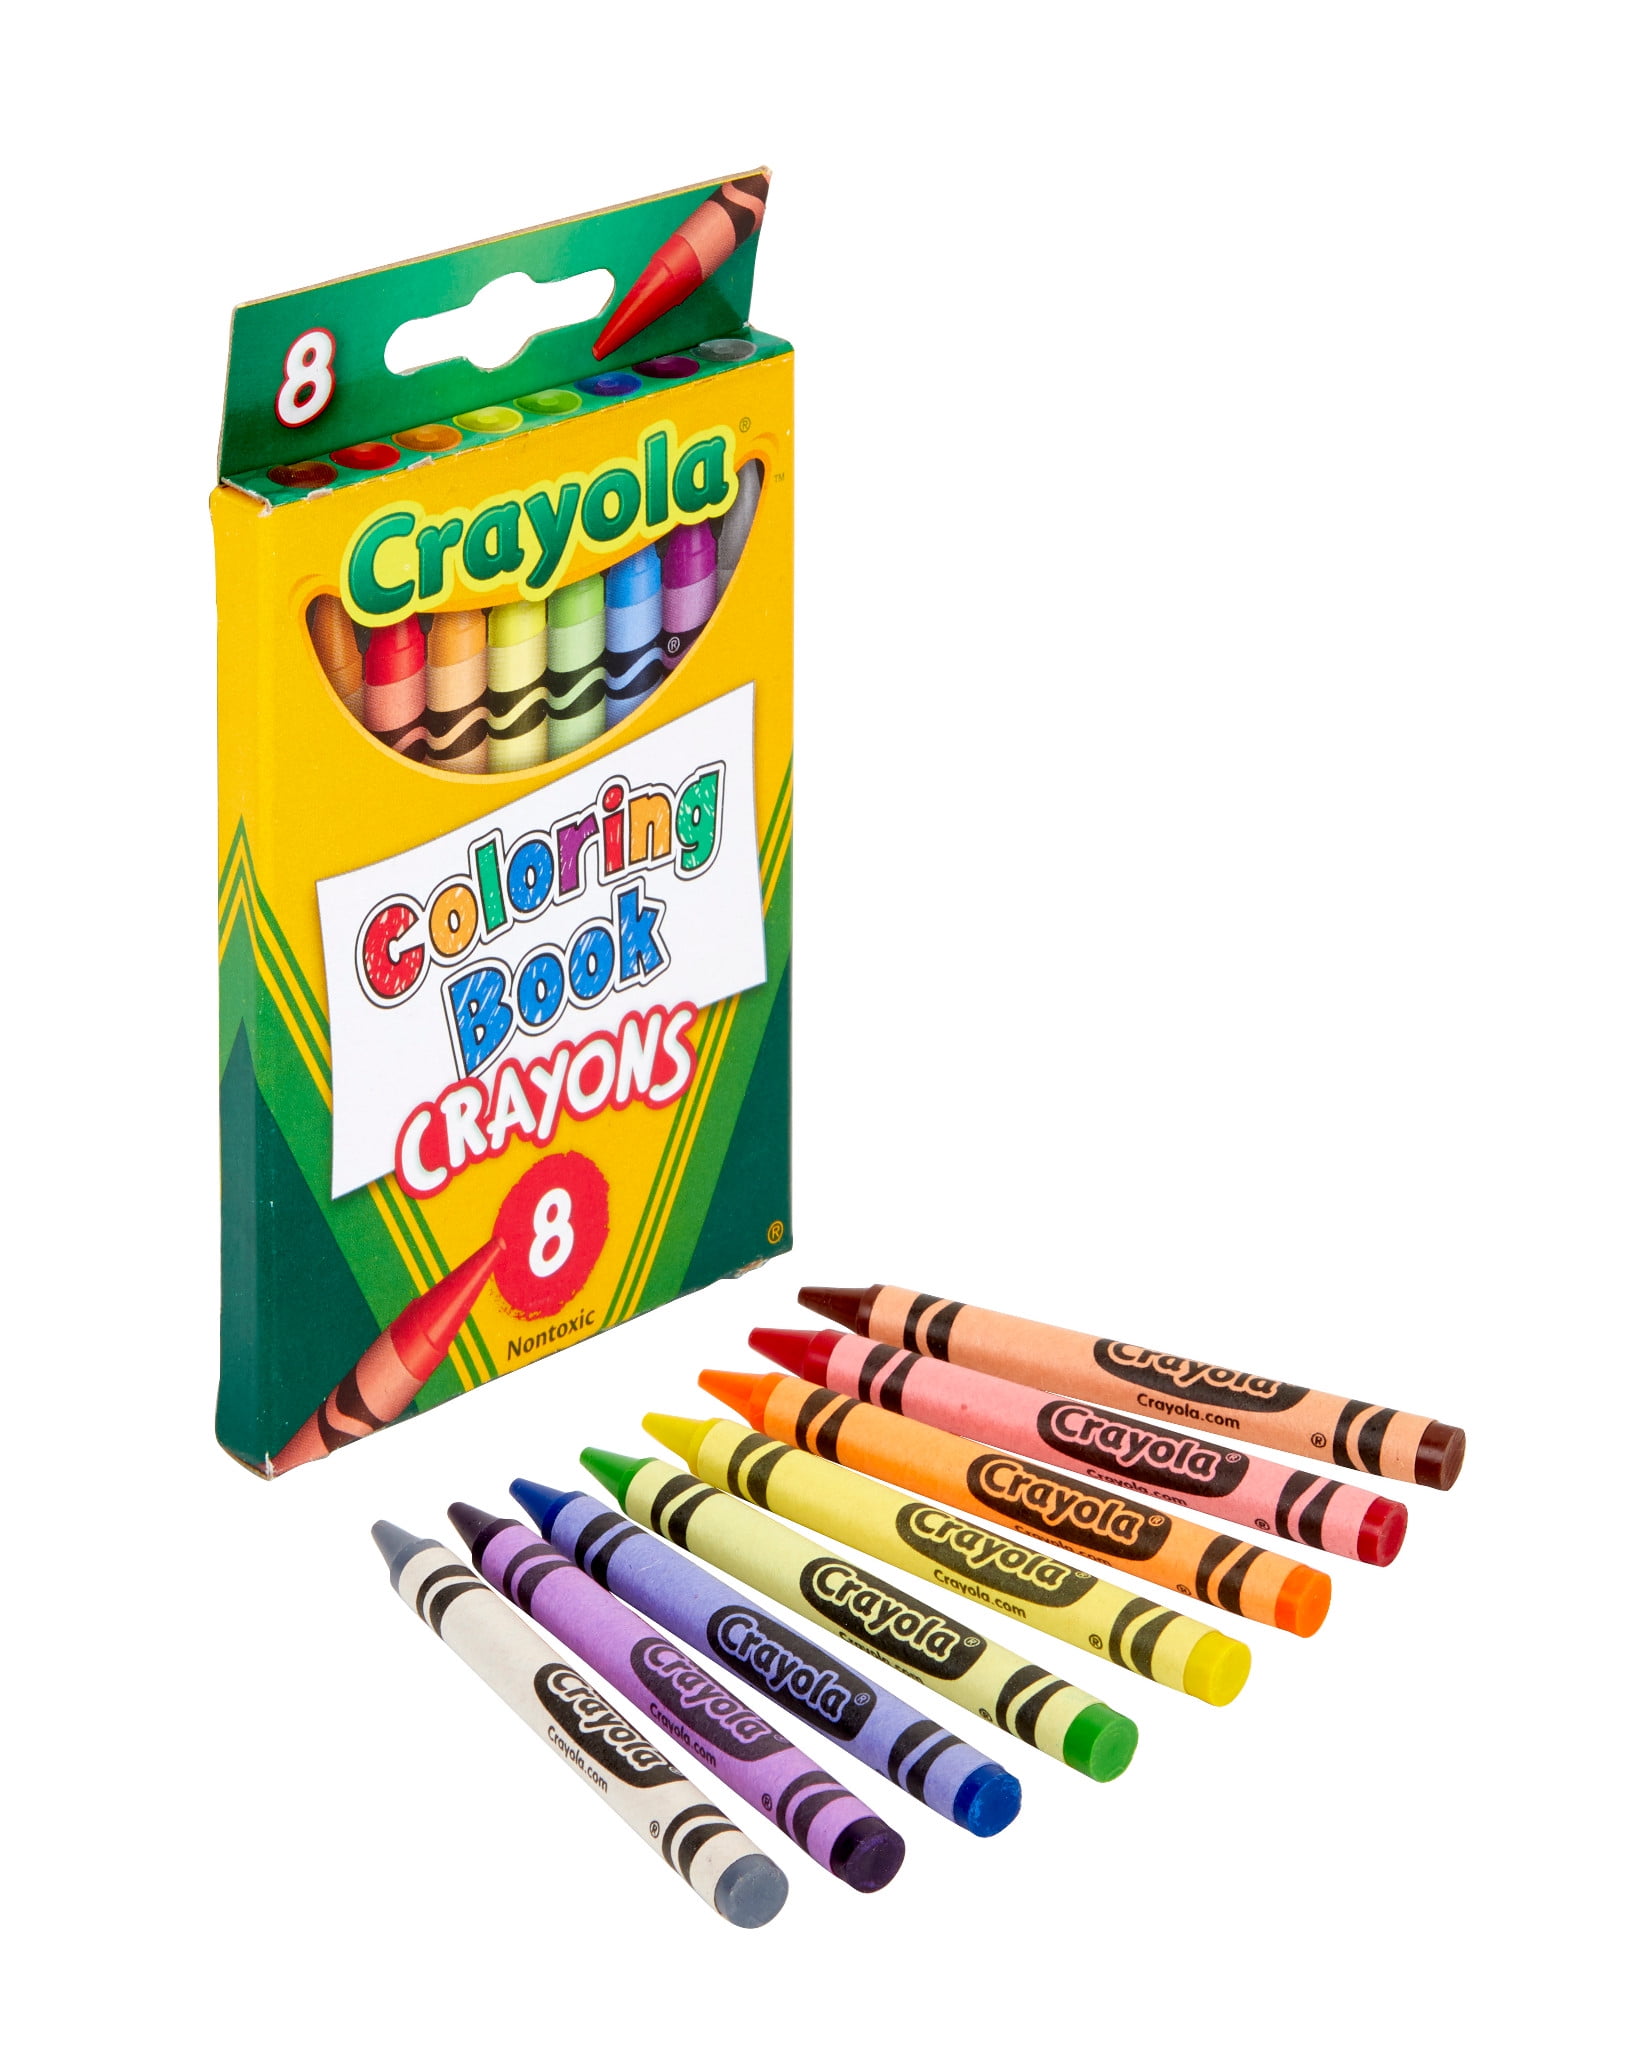 Download Crayola 8 Count Coloring Book Crayons Great For Gifting Walmart Com Walmart Com